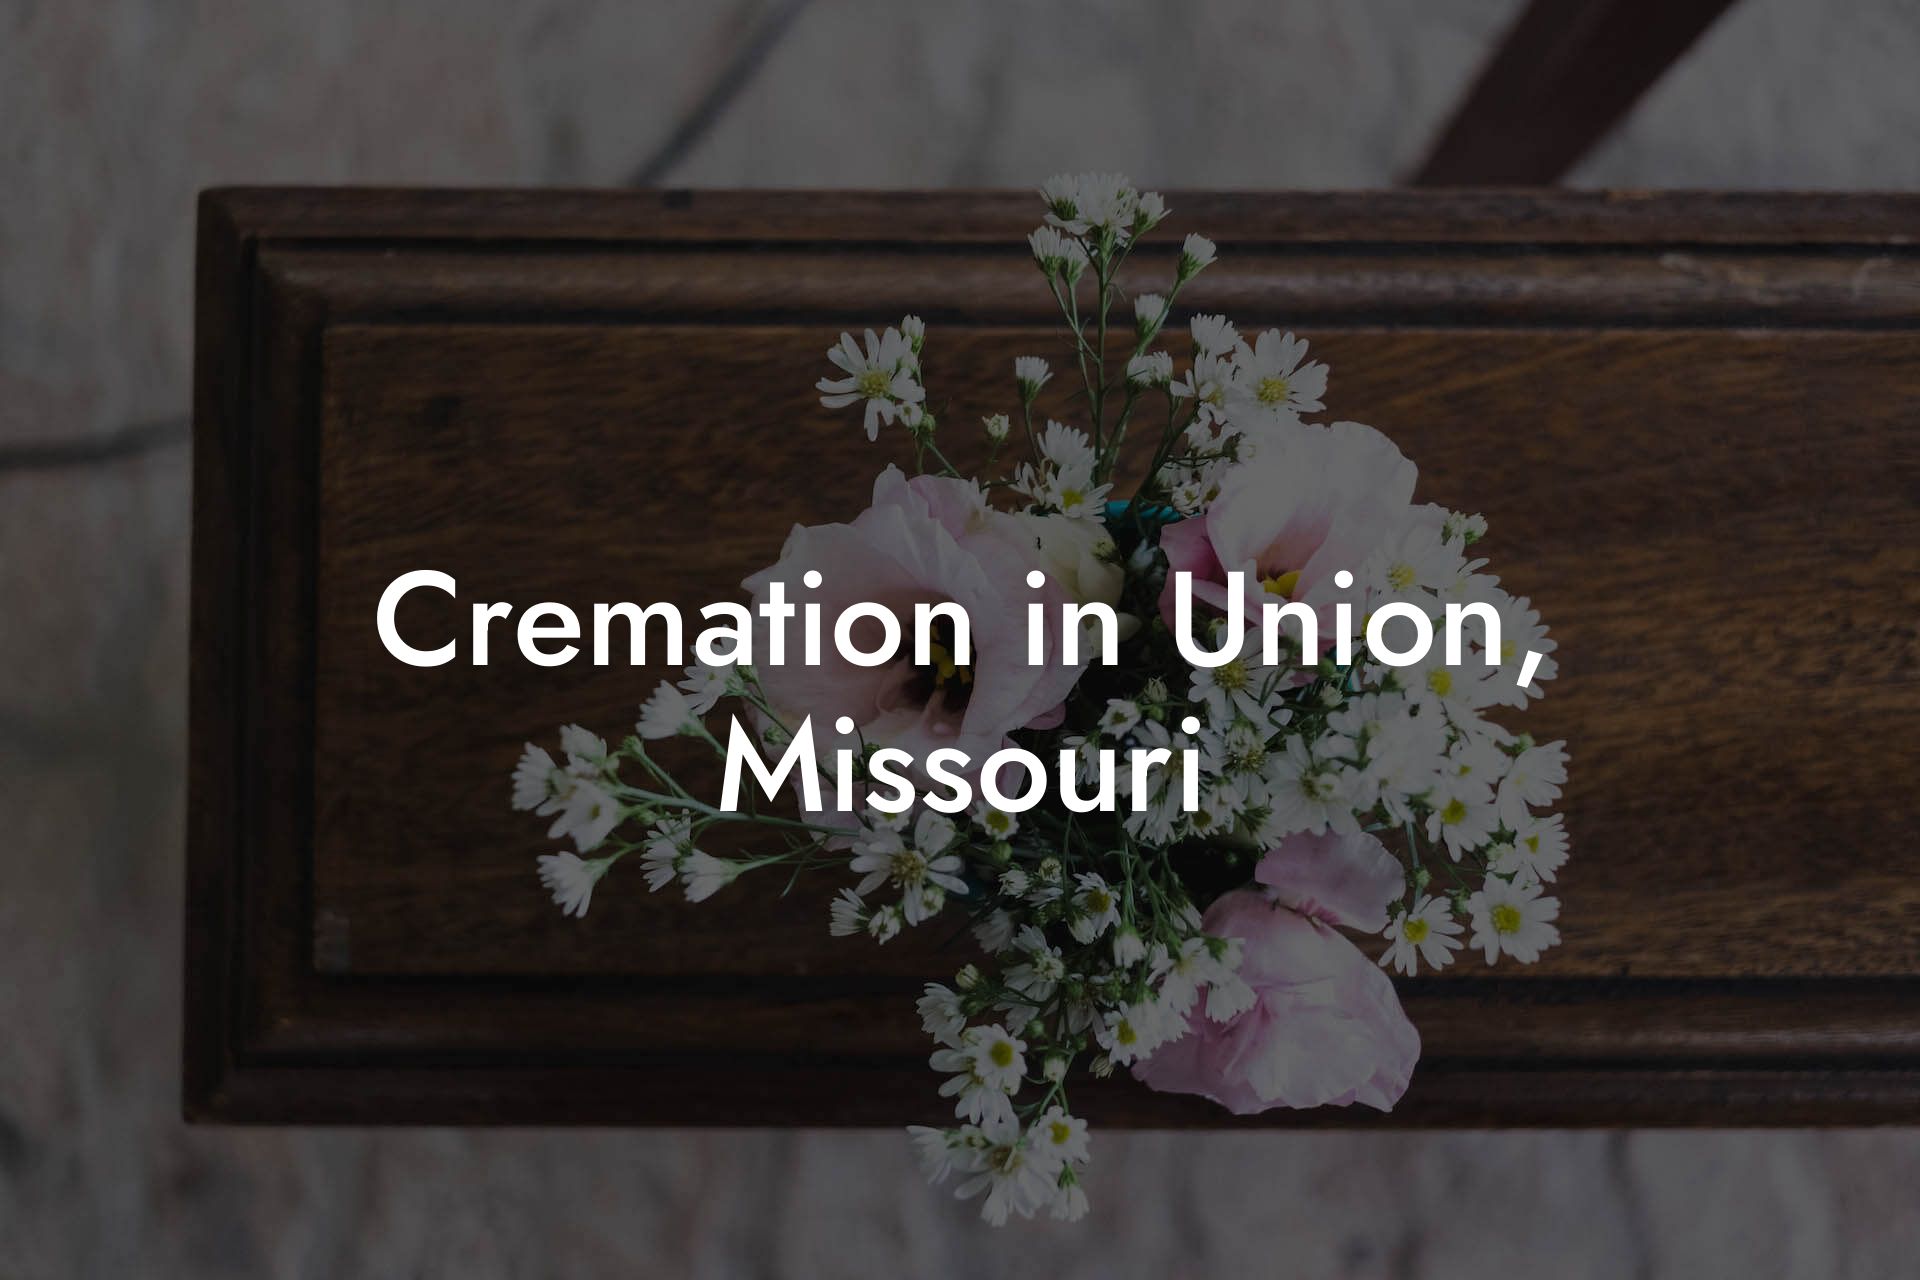 Cremation in Union, Missouri